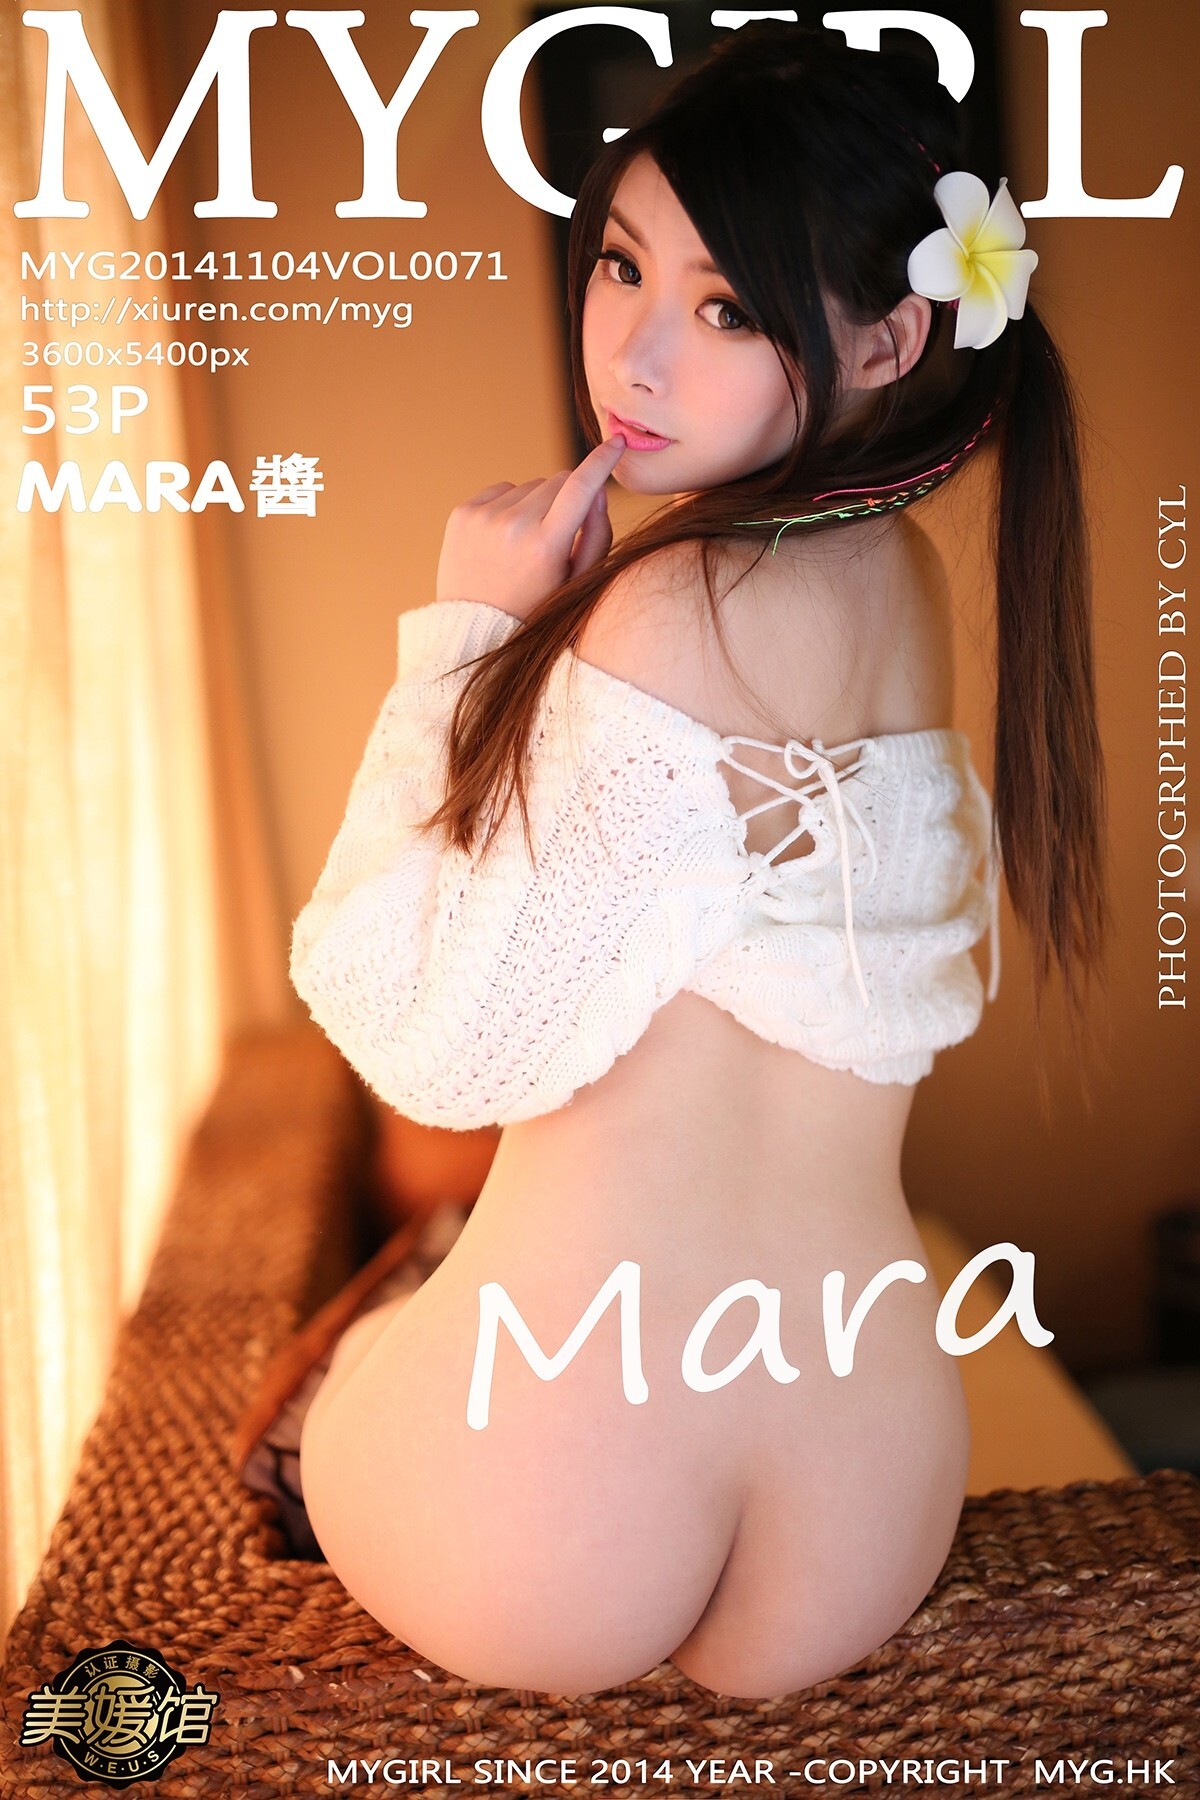 New issue 2014.11.04 vol.071 Mara sauce